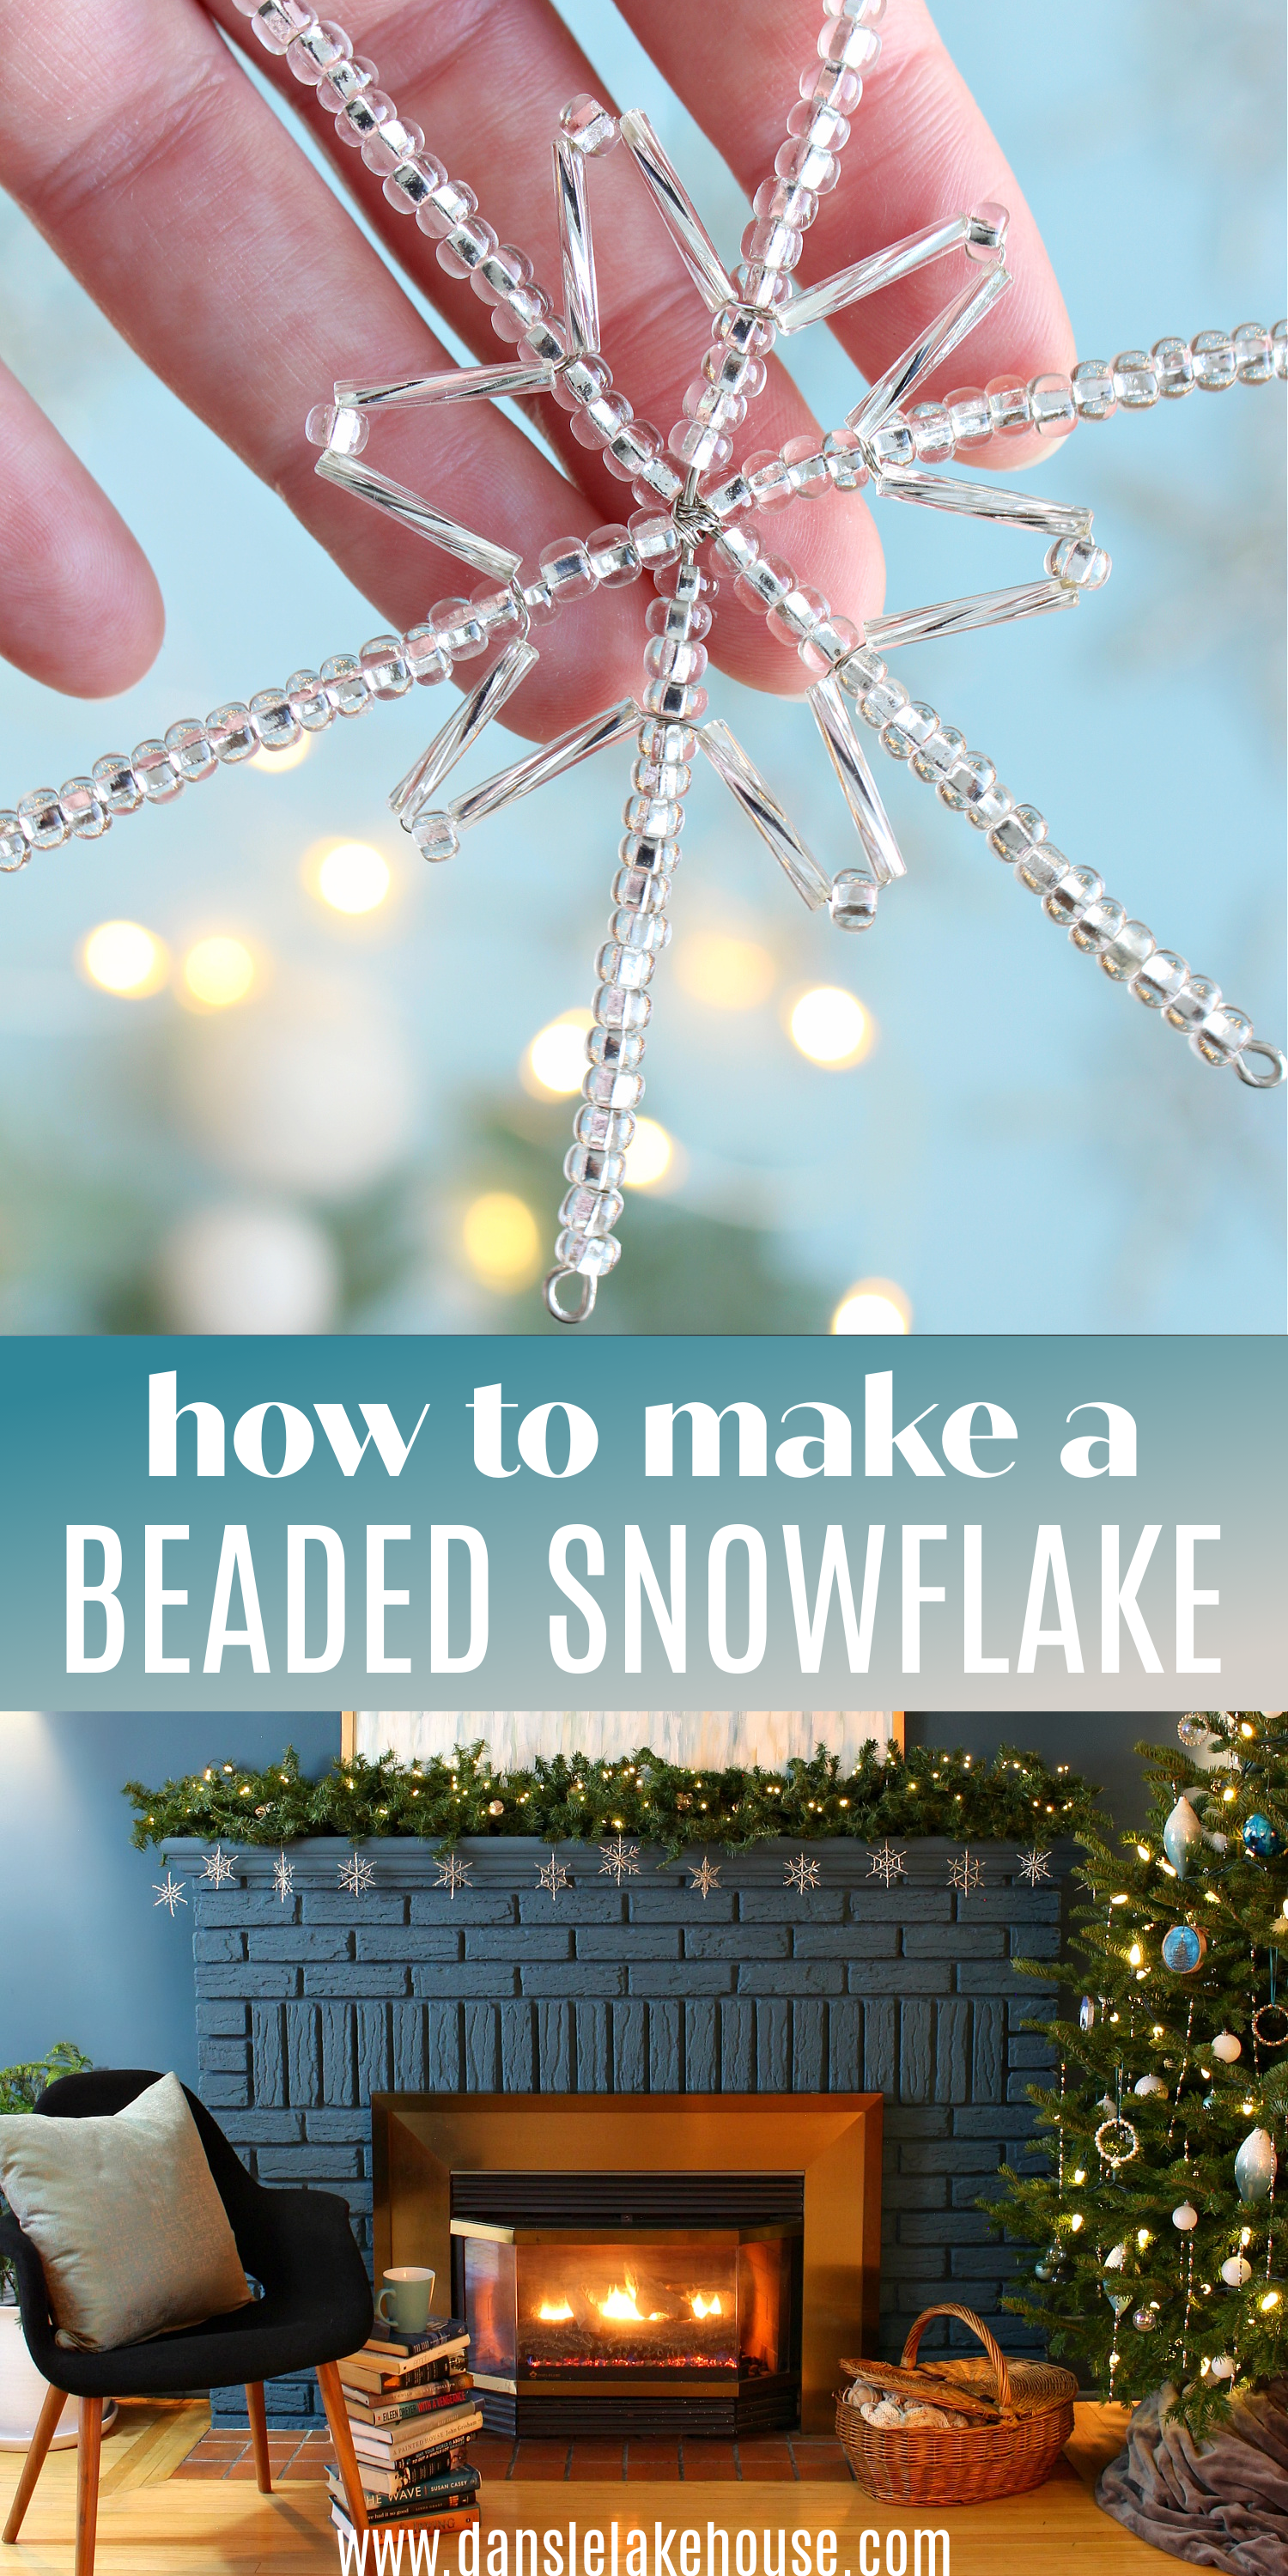 How to Make a Beaded Snowflake